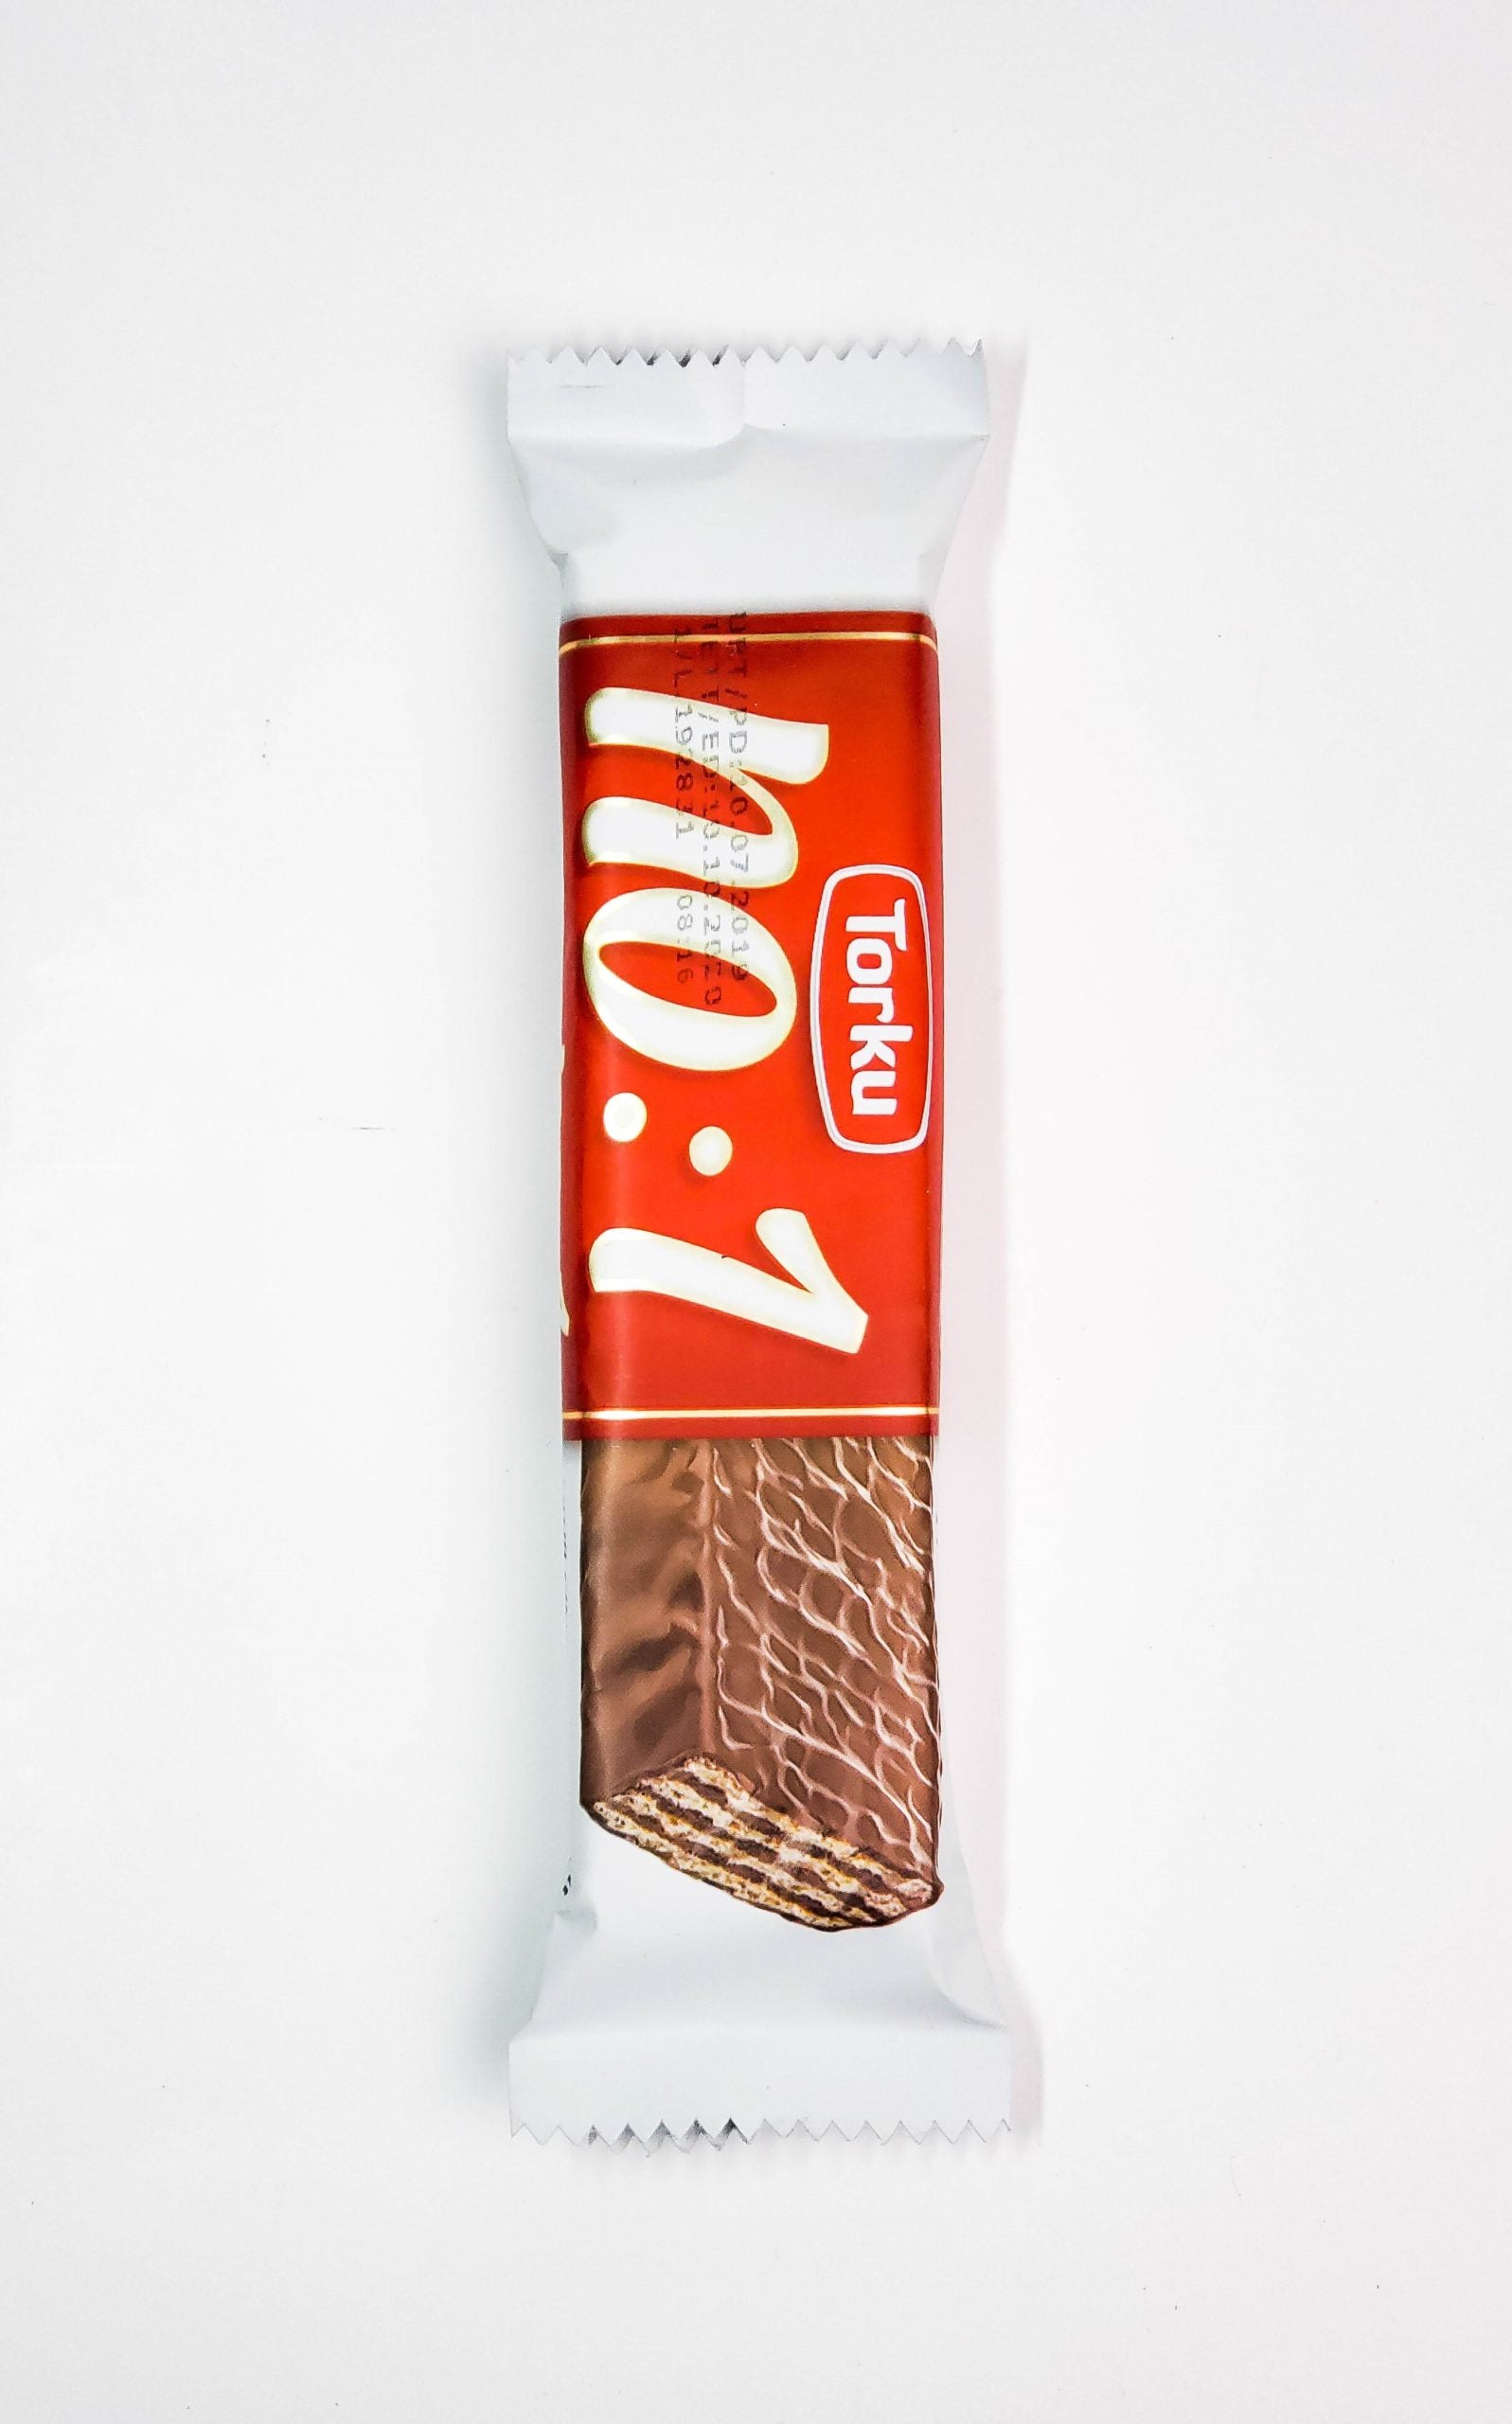 Torku no:1 Chocolate